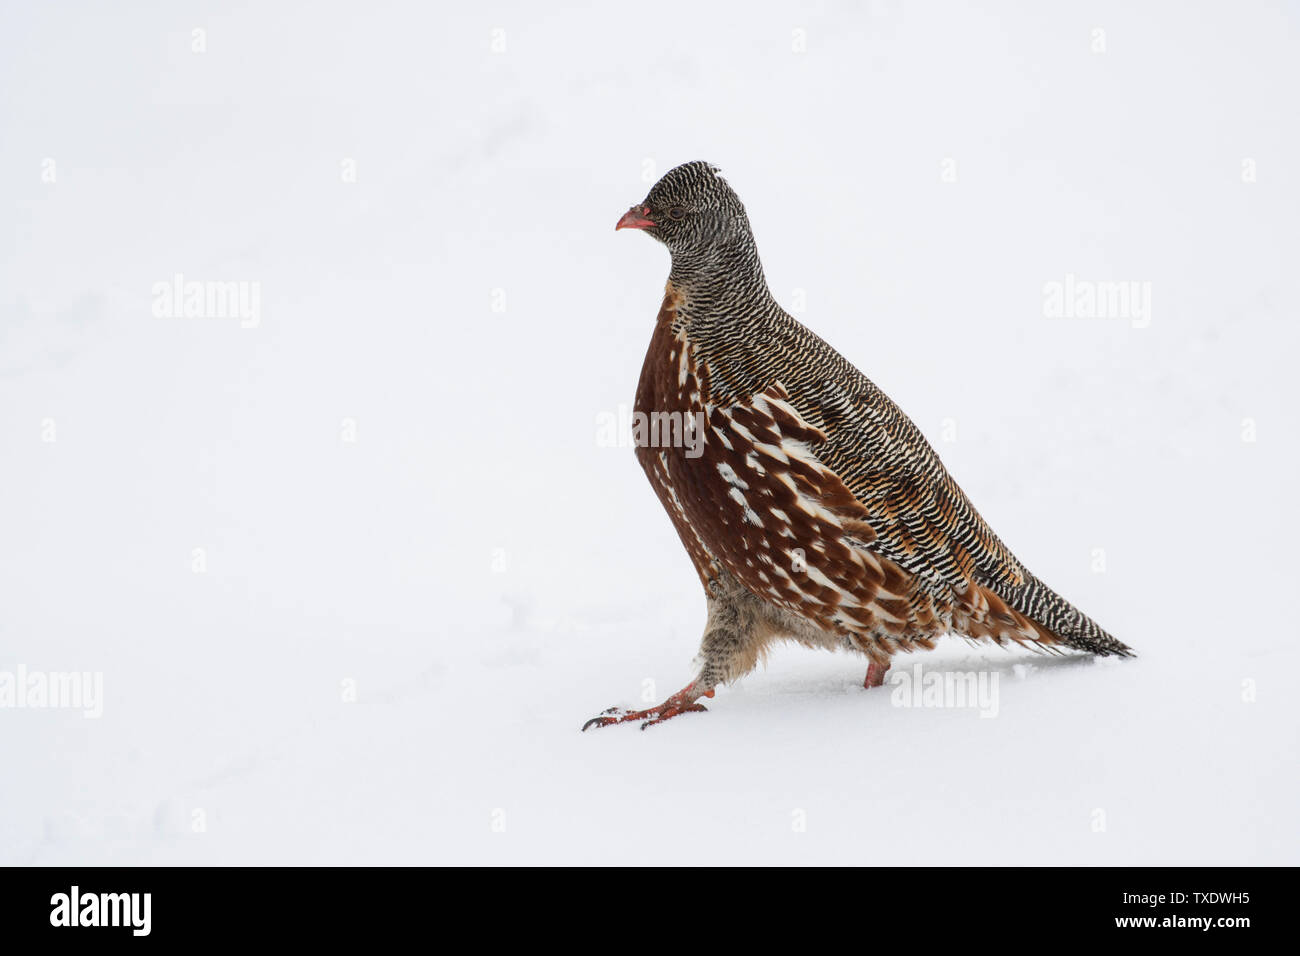 Snow Partridge bird sitting in snow, Uttarakhand, India, Asia Stock Photo